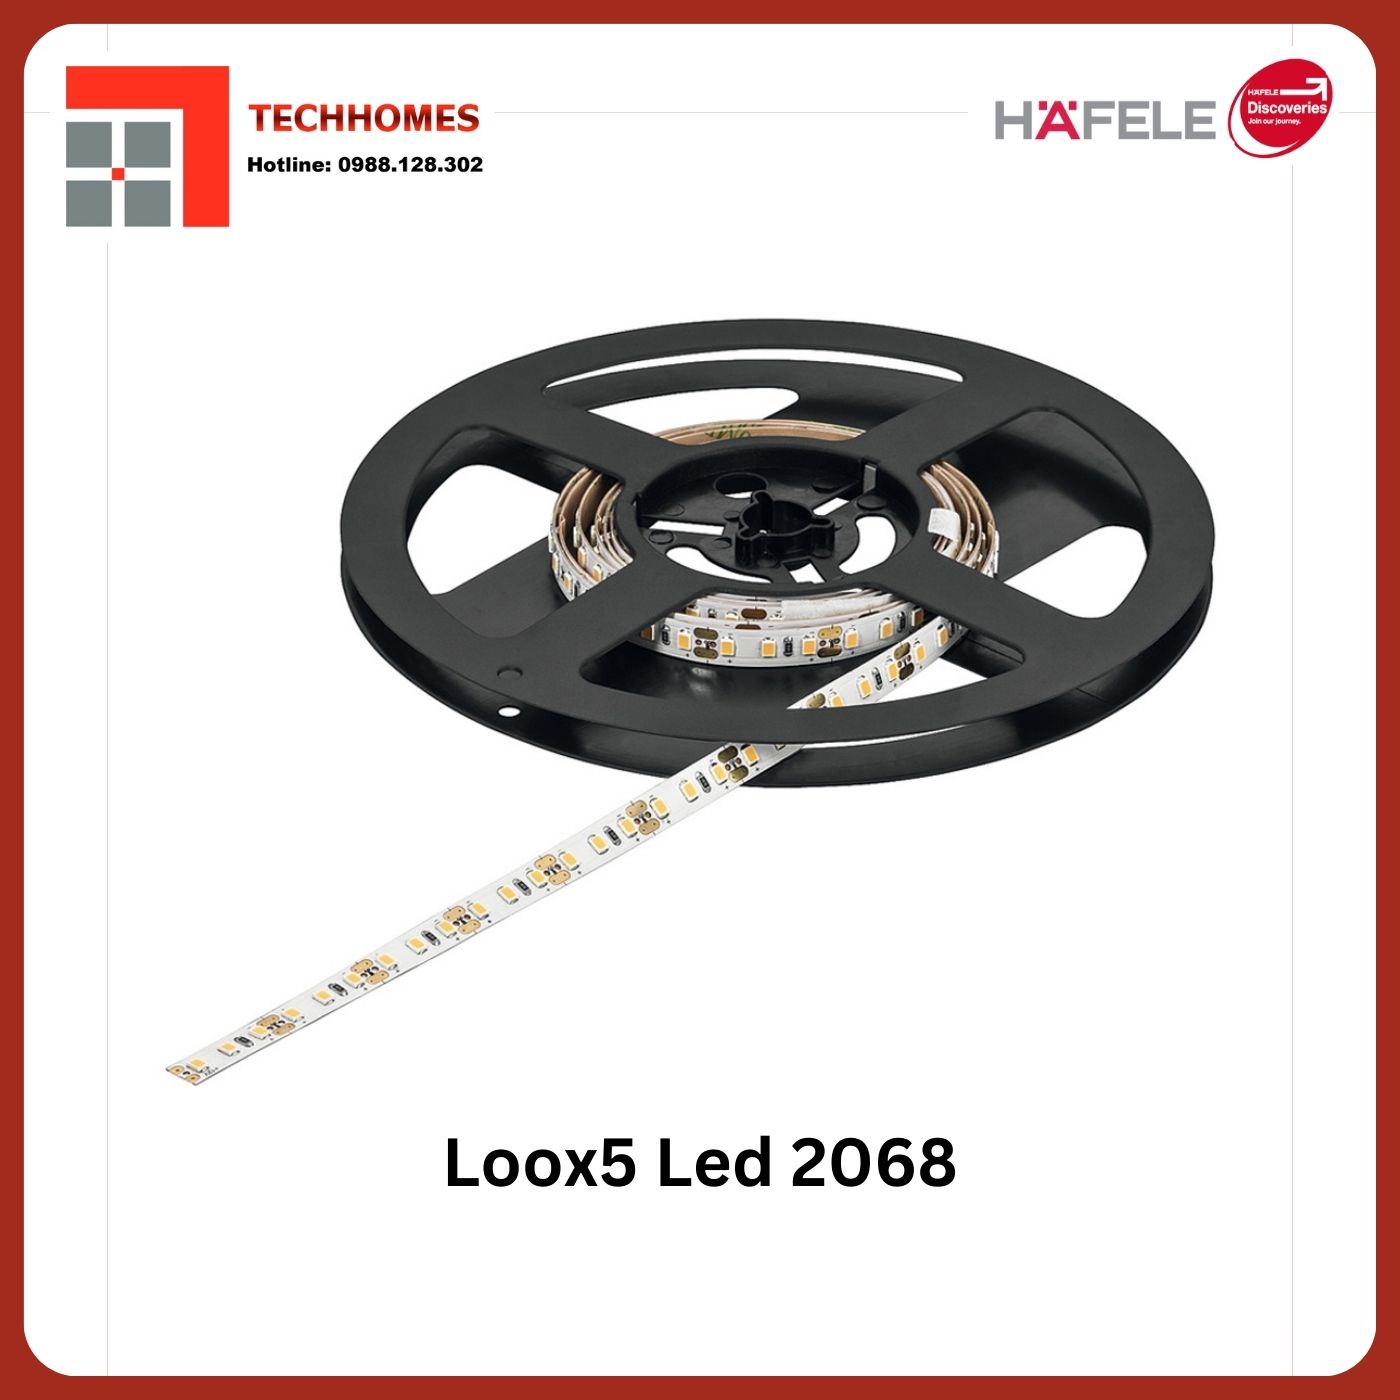 ĐÈN LED DÂY HAFELE 12V LOOX5 LED 2068 MONOCHROME 8MM - Loox5 Led 2068